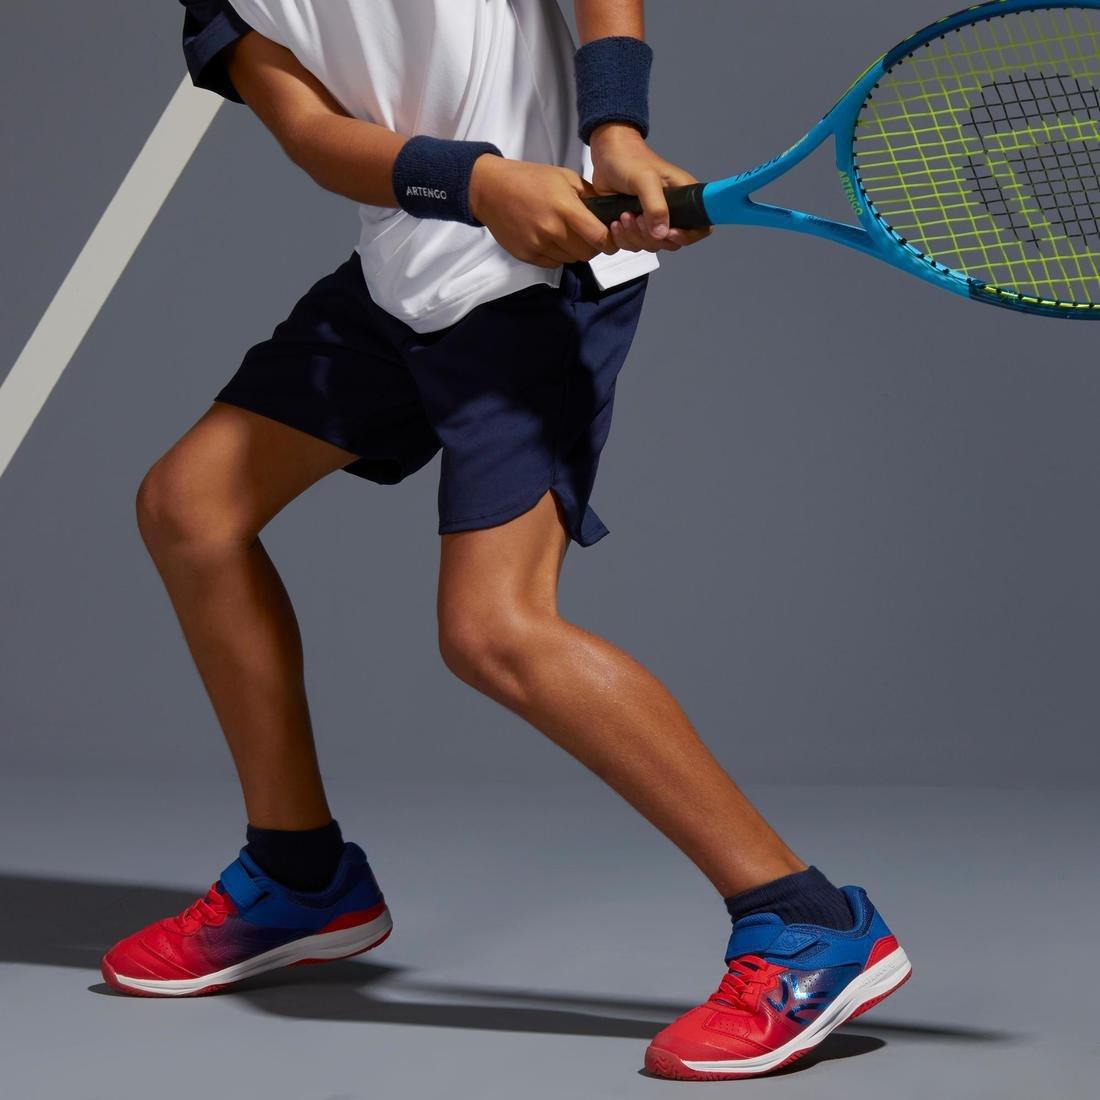 ARTENGO - Boys' Tennis Shorts TSH500, Navy